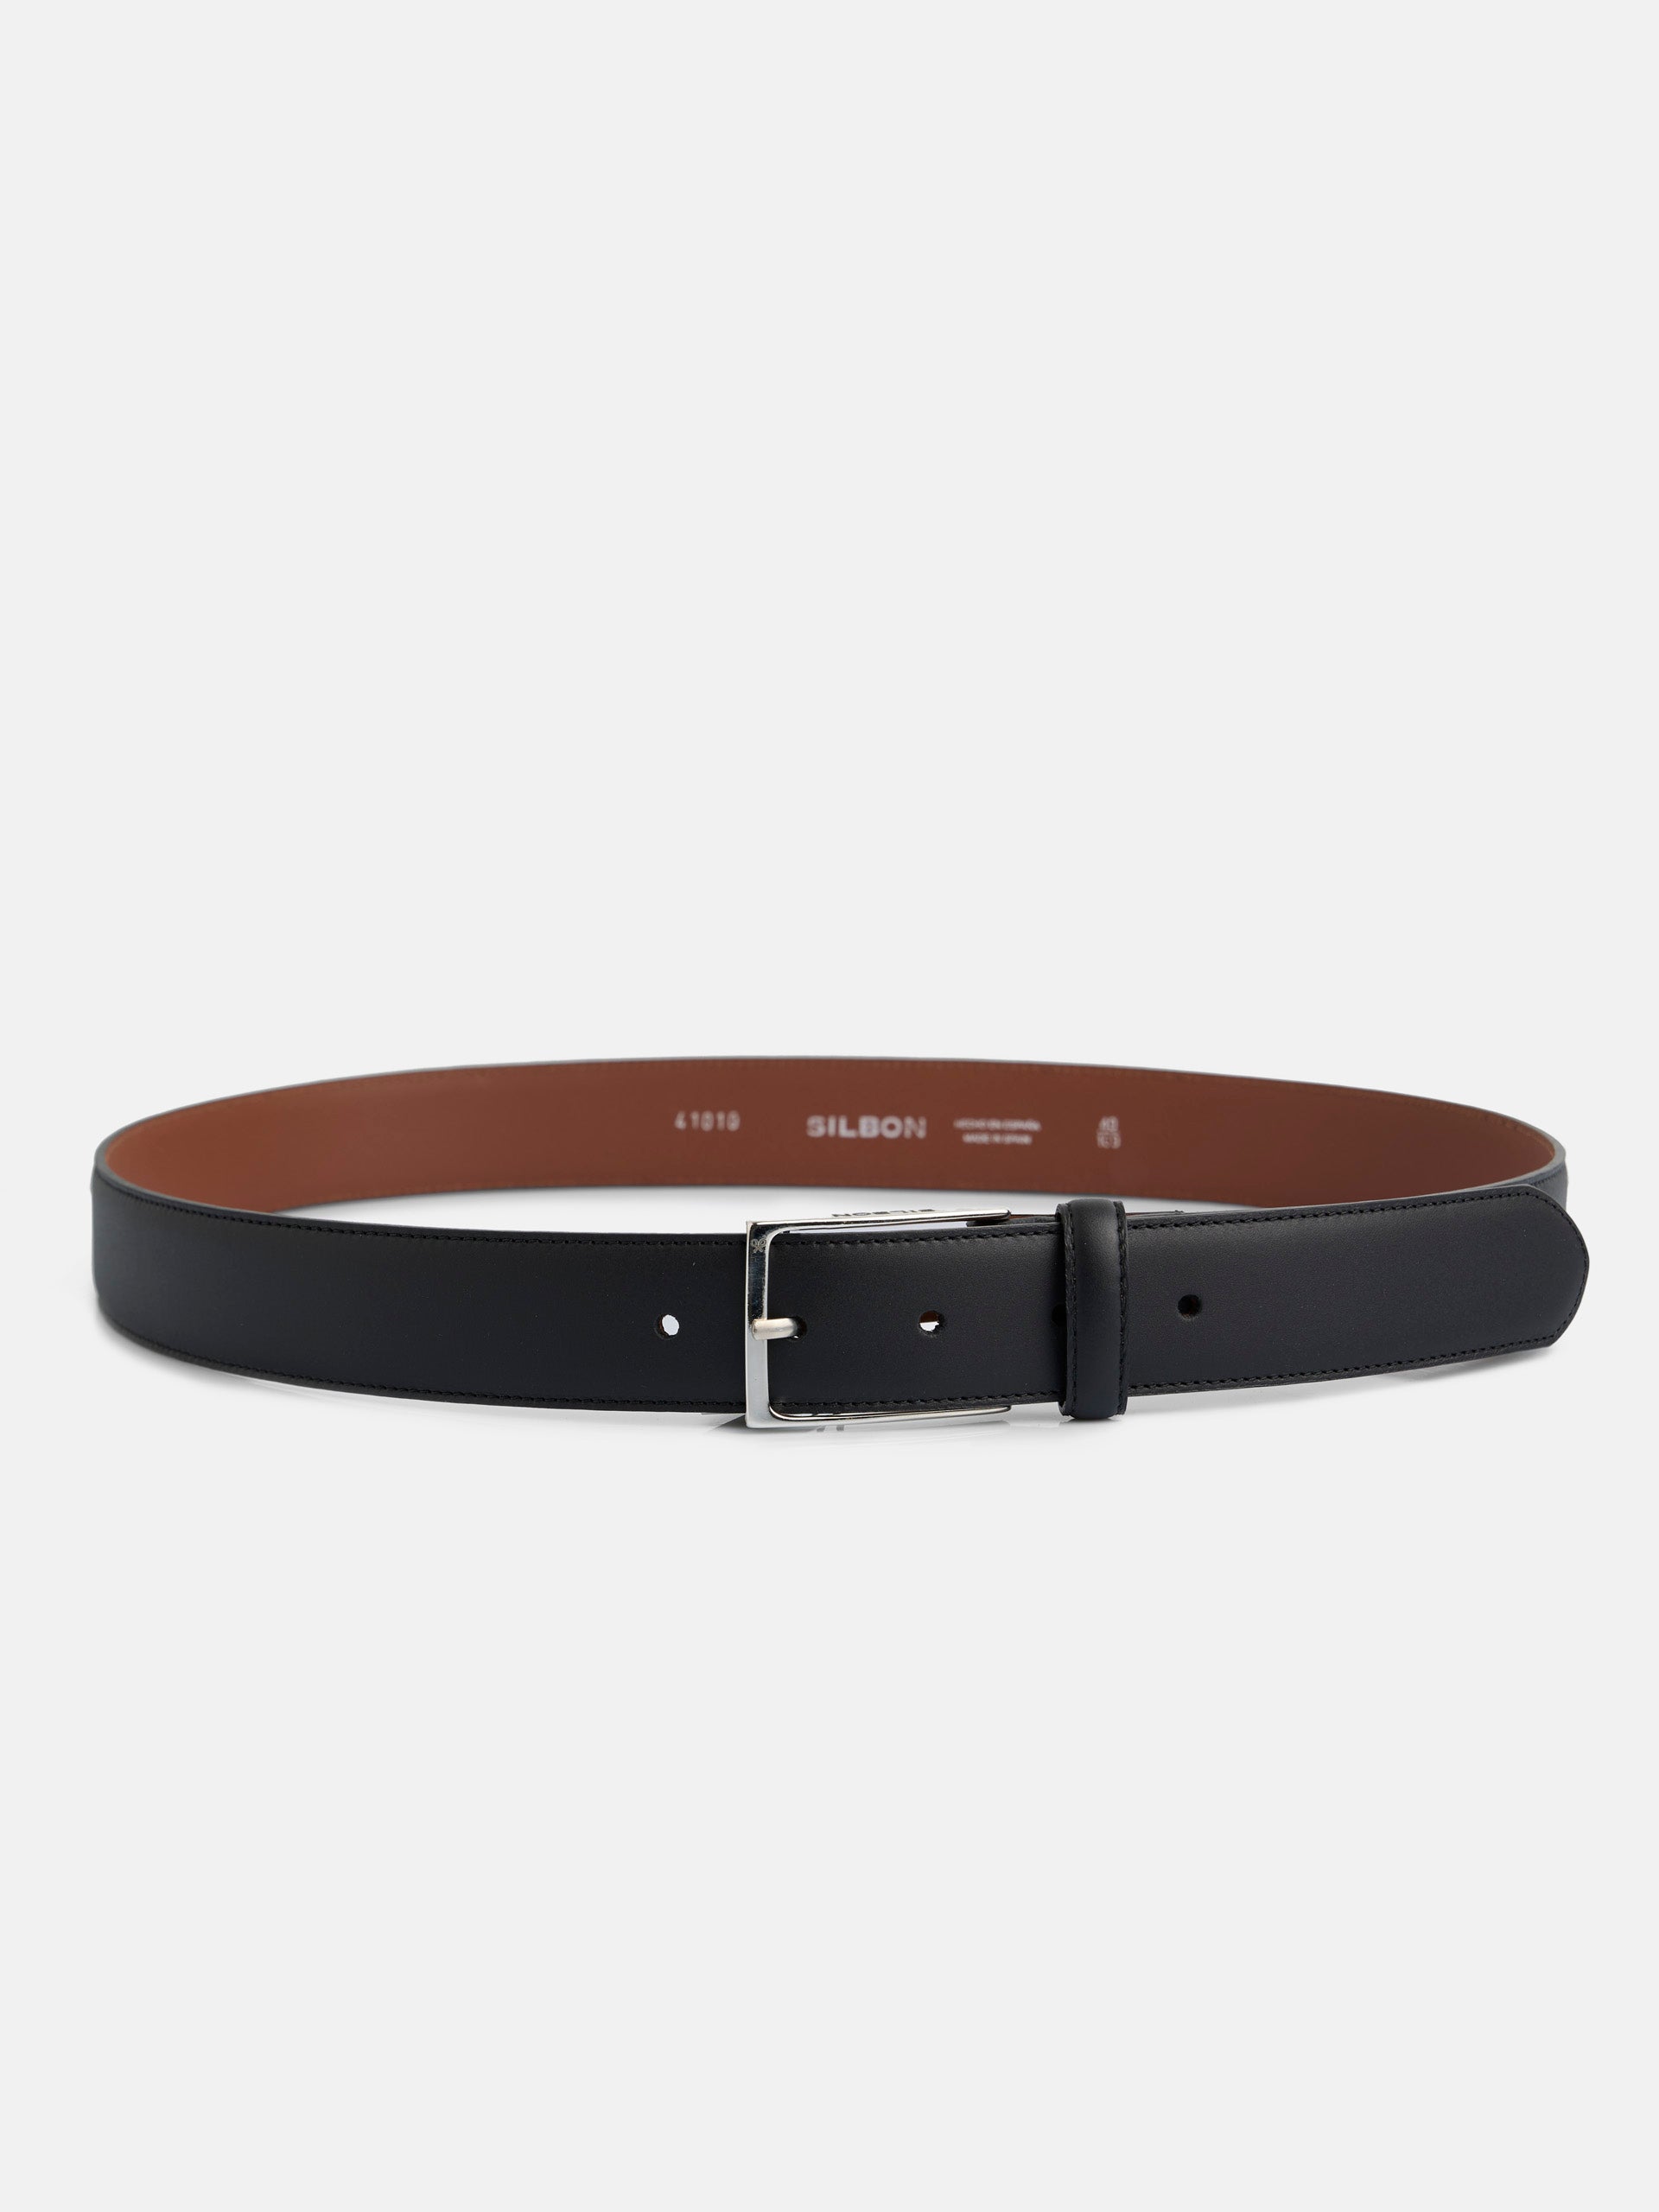 Black leather dress belt